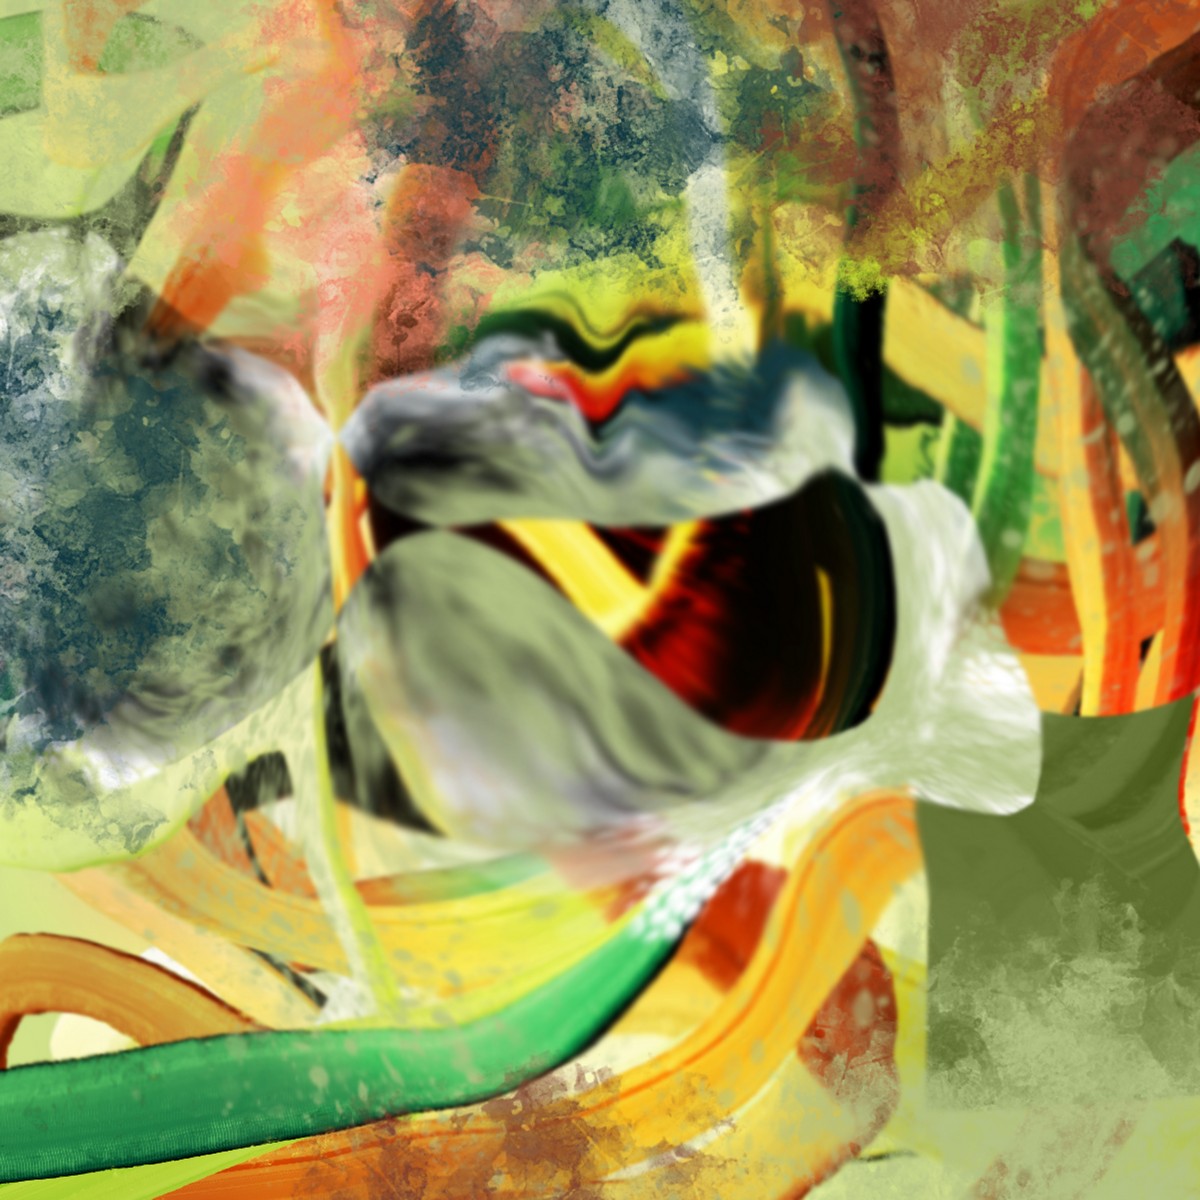 redbubble.com/shop/ap/143295…
#artprints
#wallpaper
#background
#abstractbackground
#abstract
#artcollector
#nft
#nfts
#nftcollector
#abstractart
#abstractexpressionism
#expressionism
#digitalart
#digitalabstract
#digitalexpressionism
#Contemporary
#artwork
#pattern